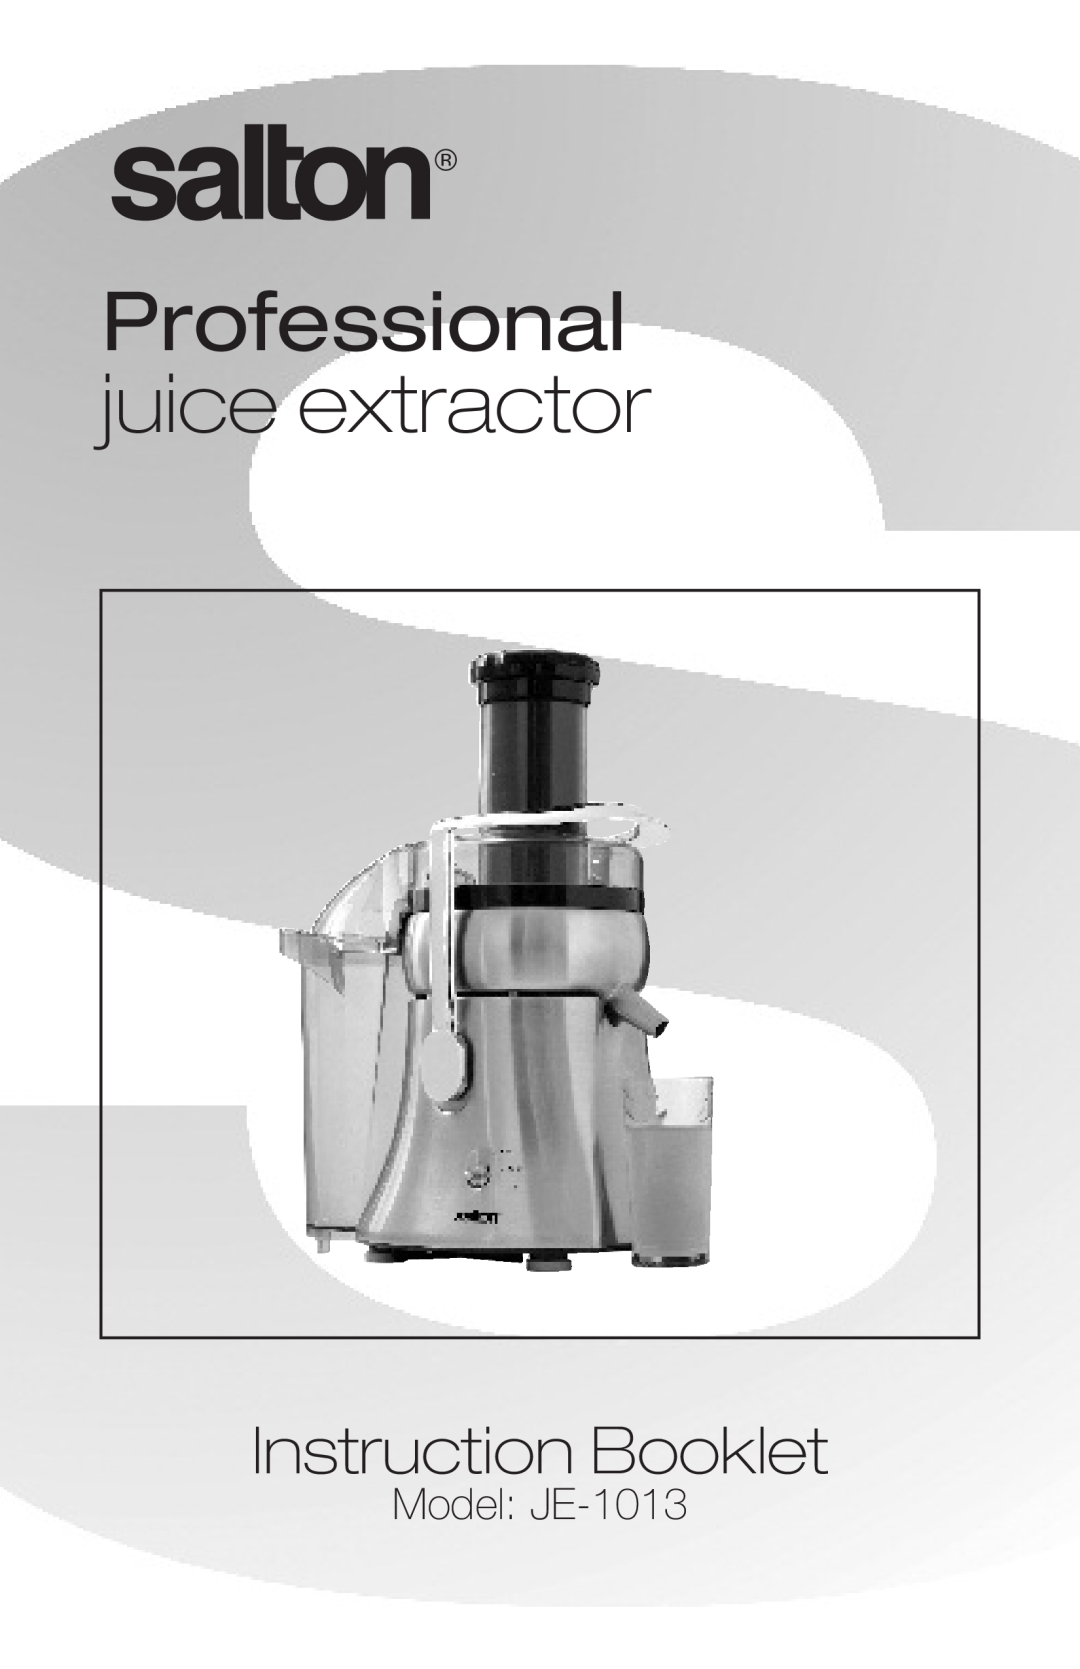 Salton manual Professional juice extractor, Instruction Booklet, Model JE-1013 